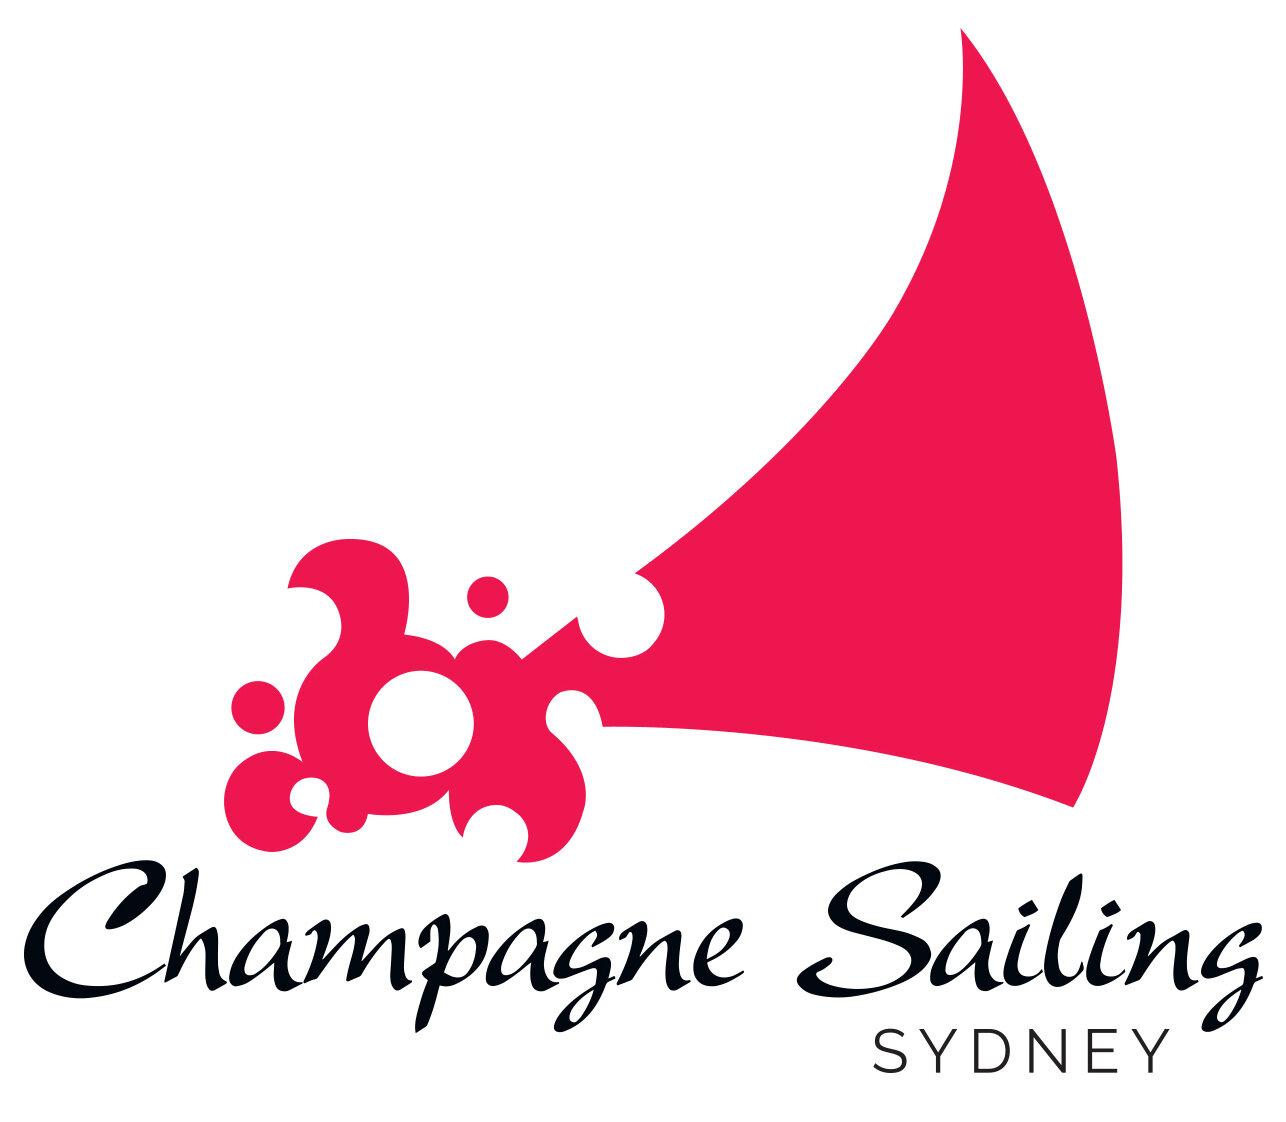 Champagne Sailing